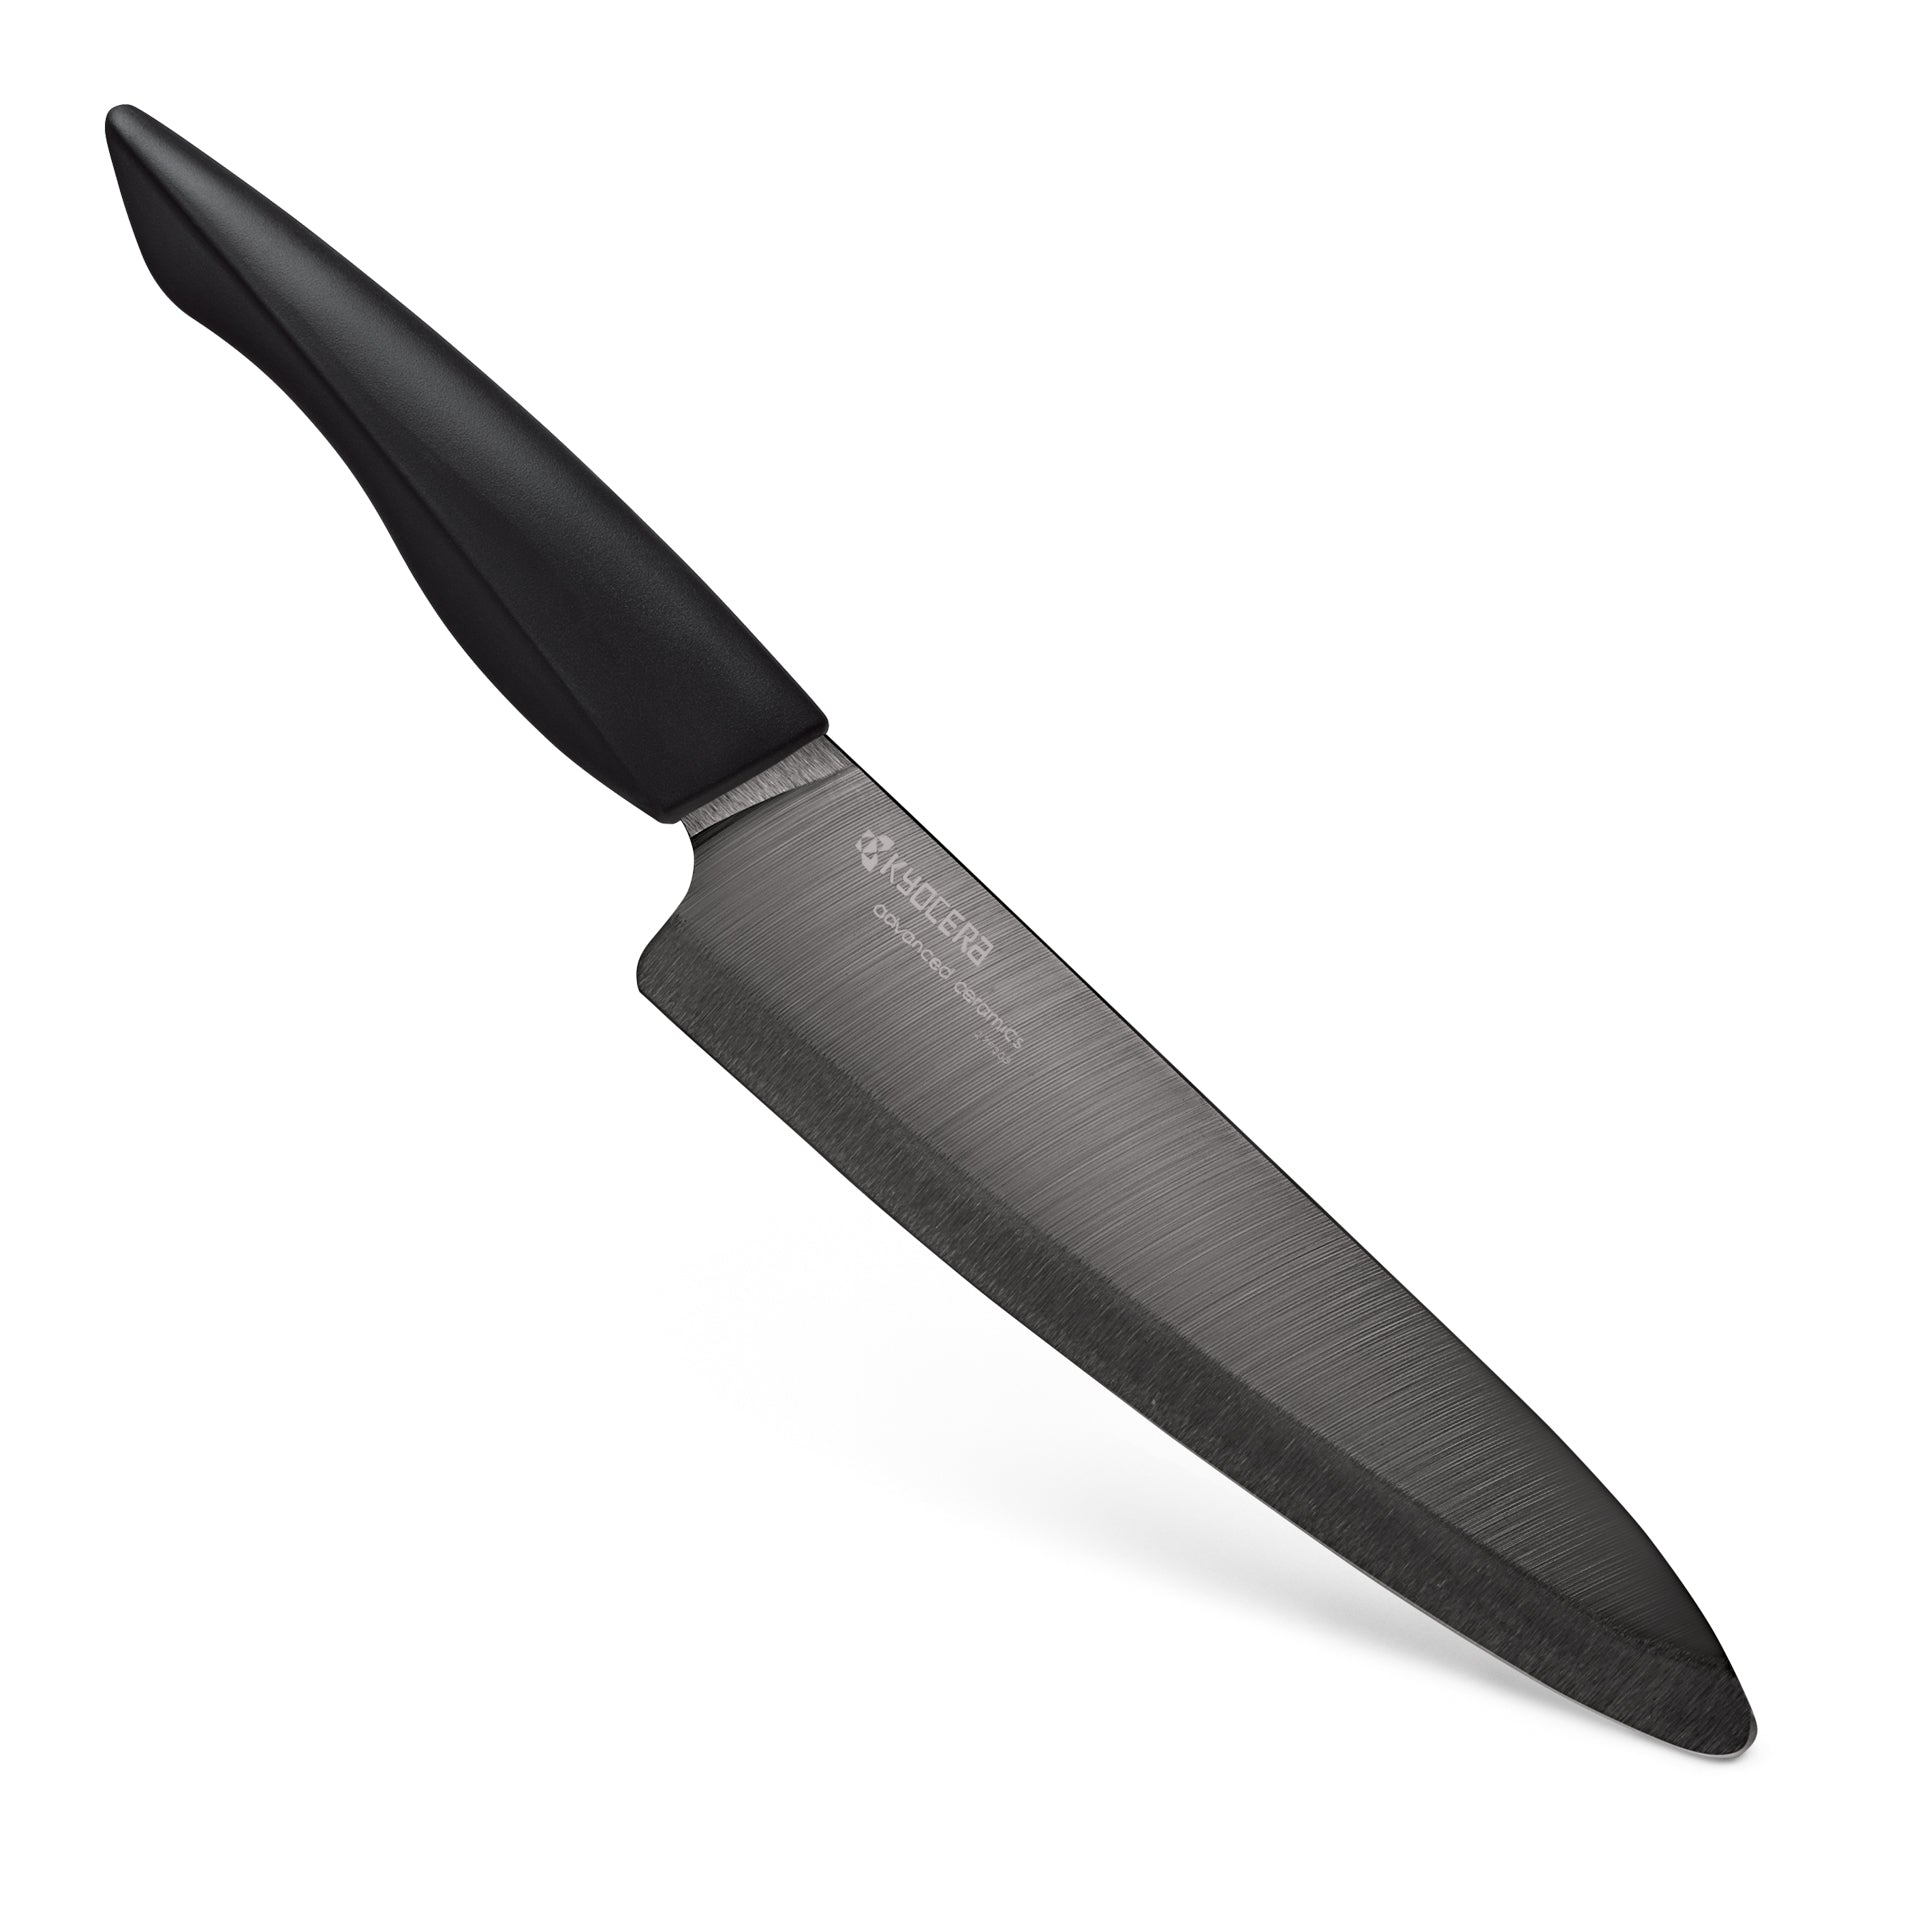 Kyocera Innovation 7'' Ceramic Chef's Knife